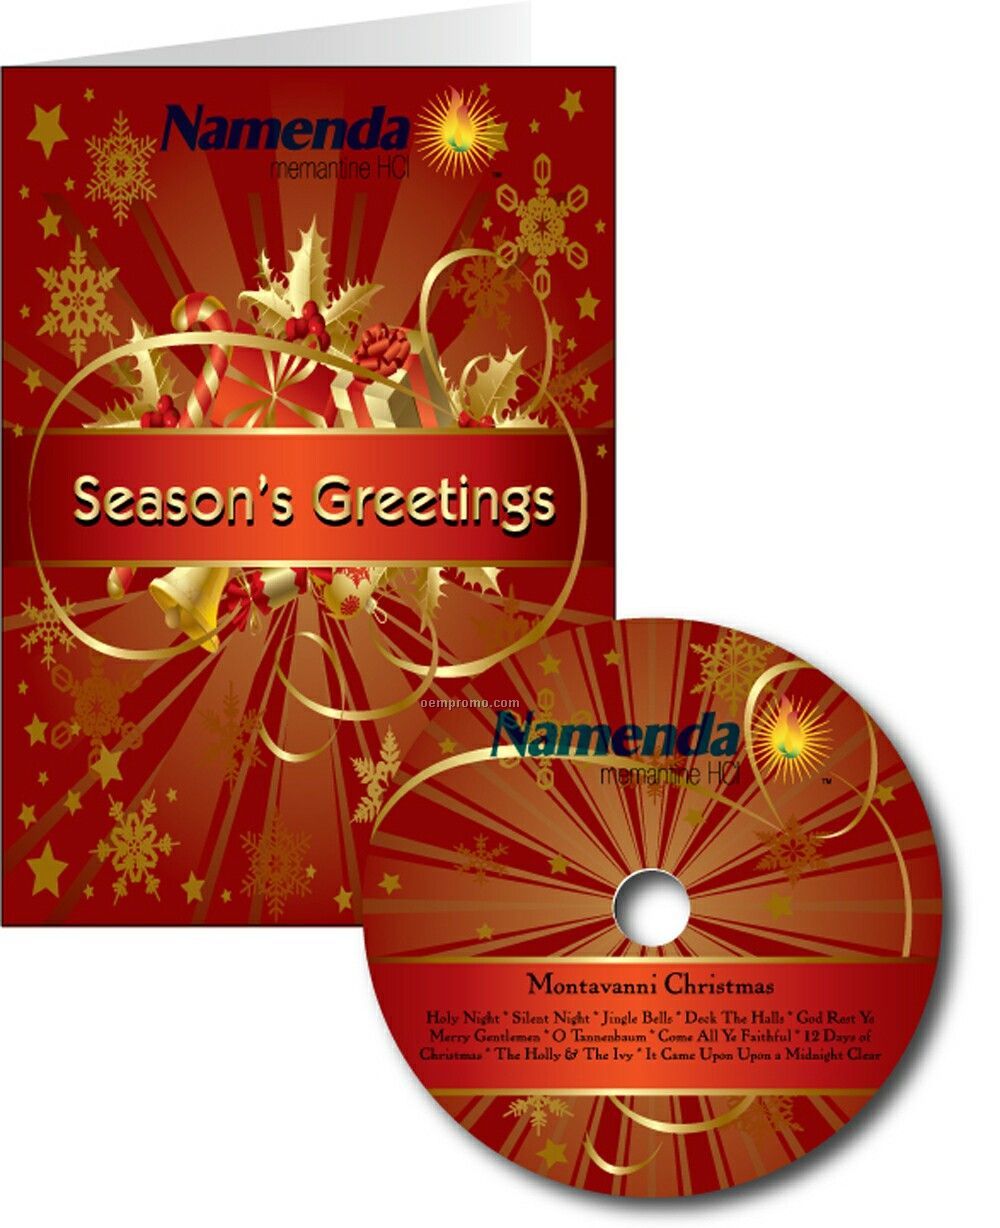 Gold Ribbon & Stars Holiday Greeting Card With Matching CD